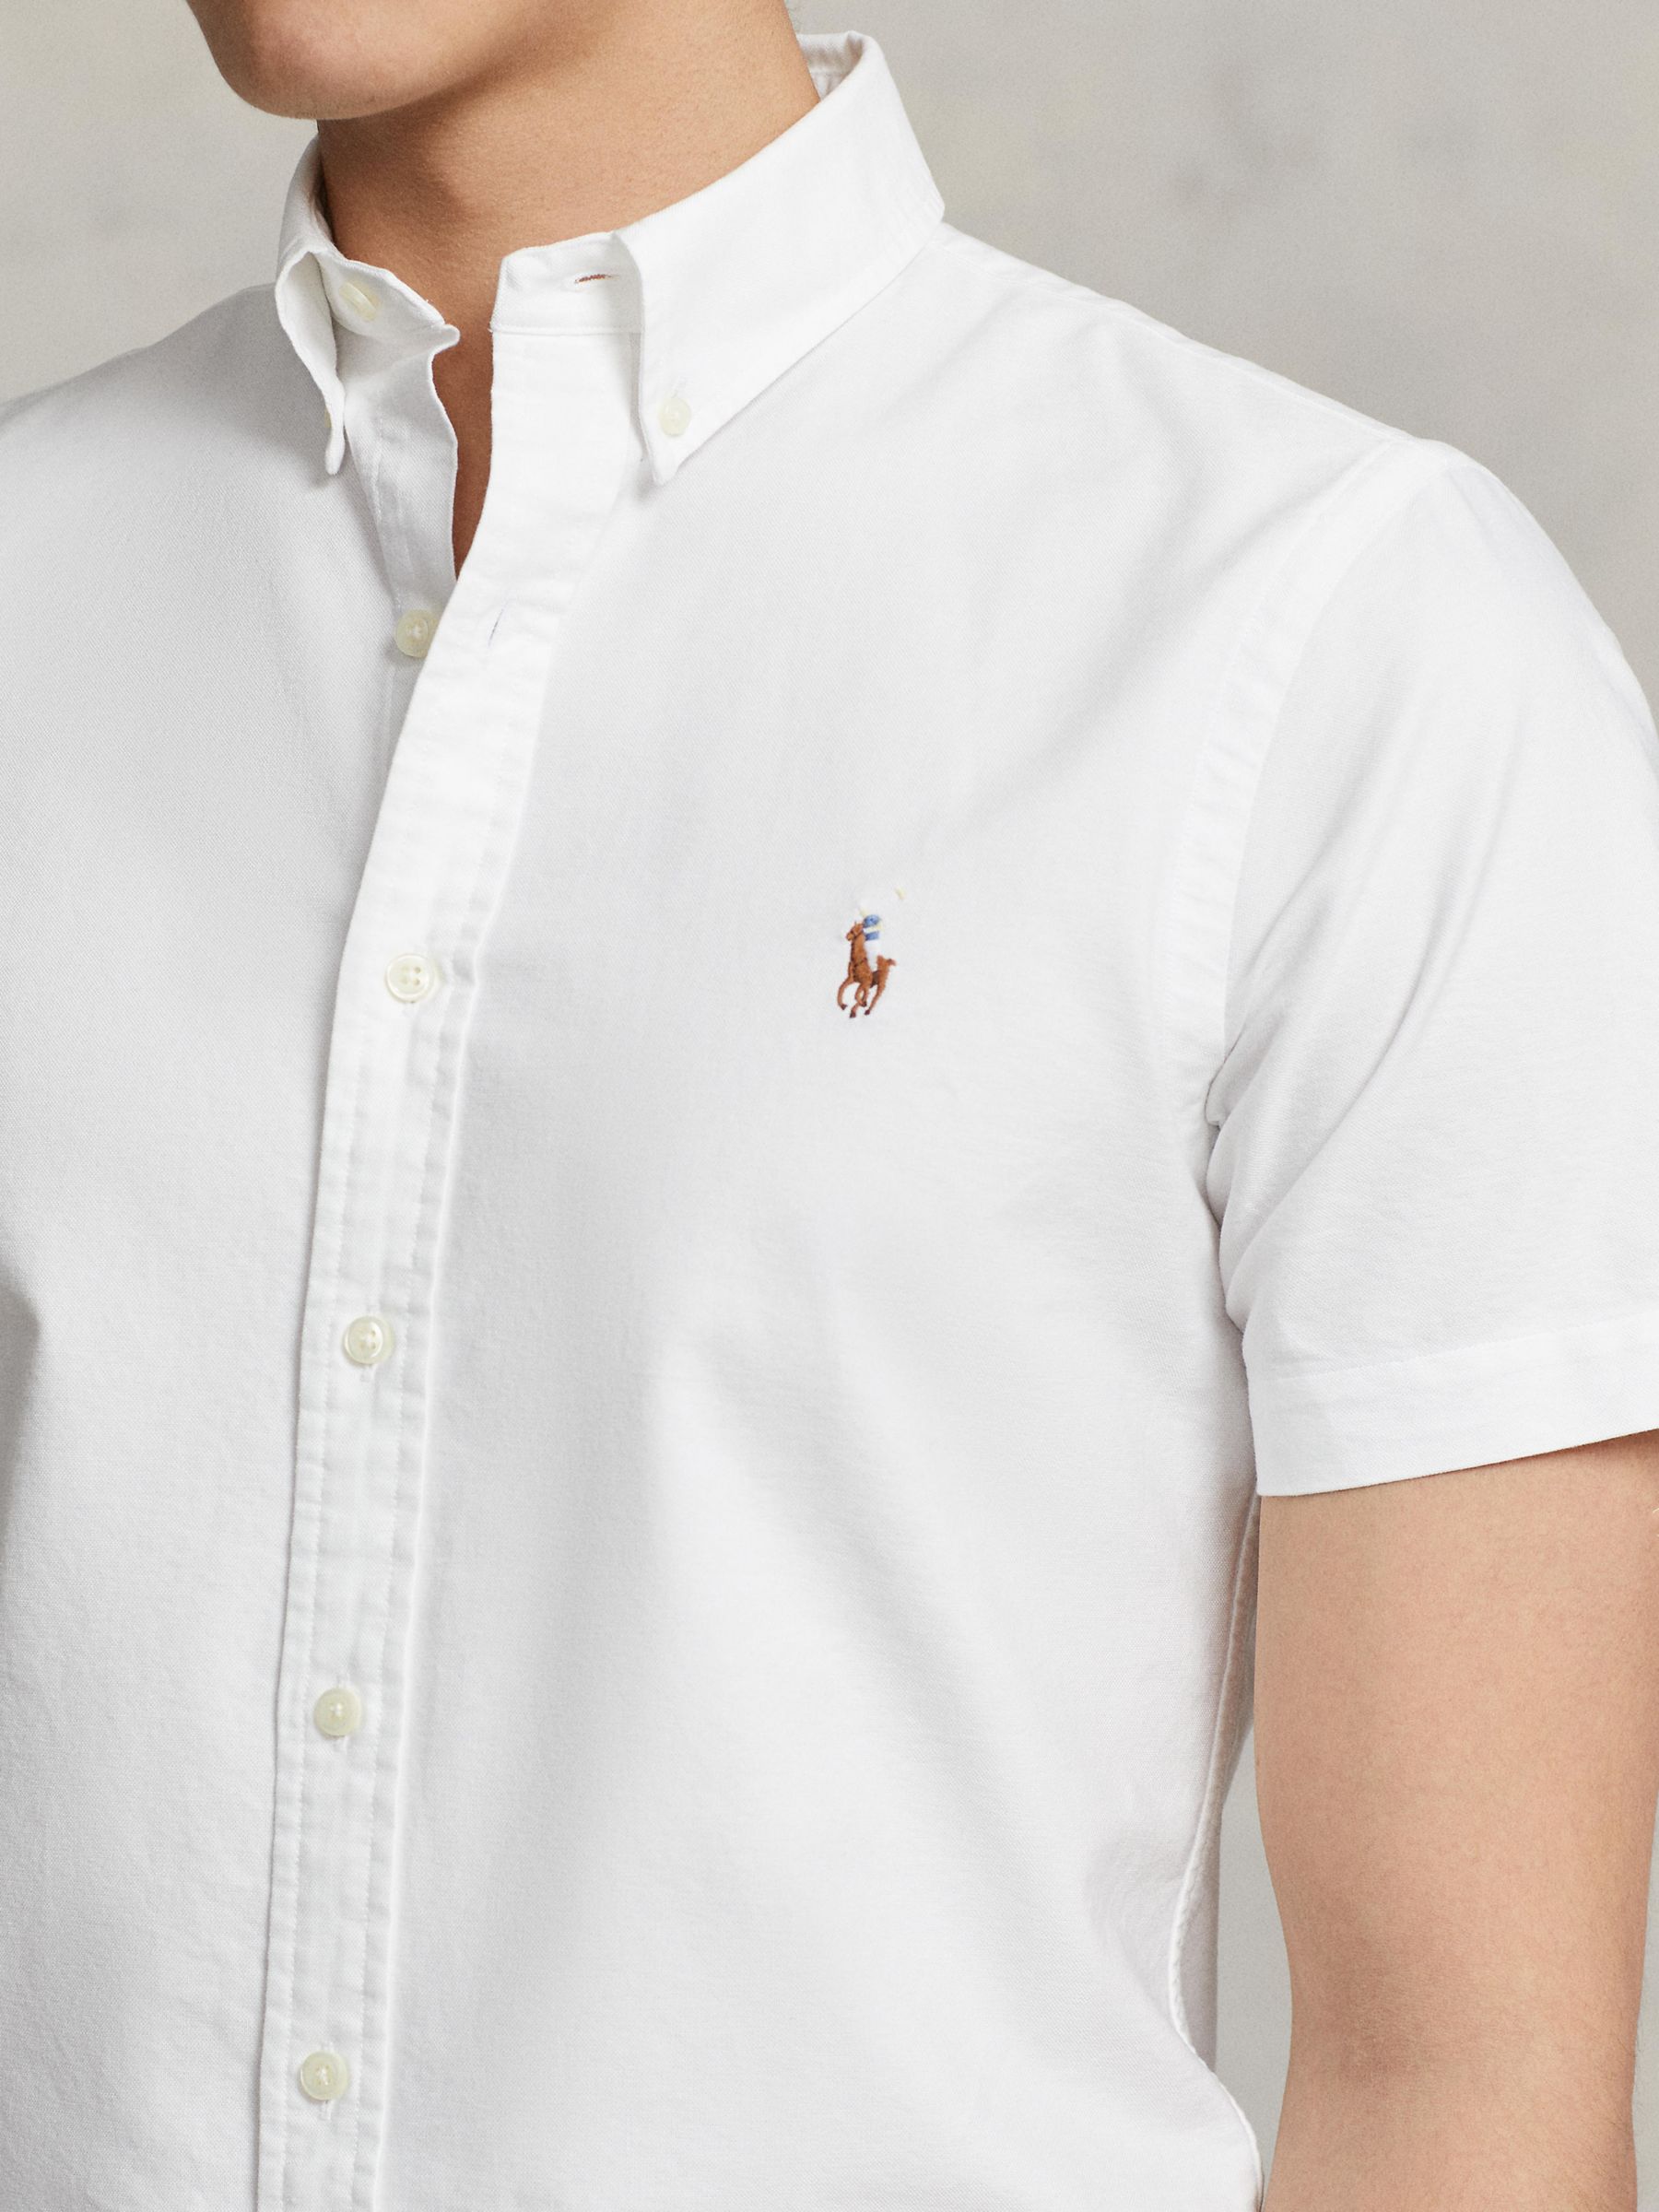 Ralph Lauren Slim Fit Oxford Short Sleeve Shirt, White, M